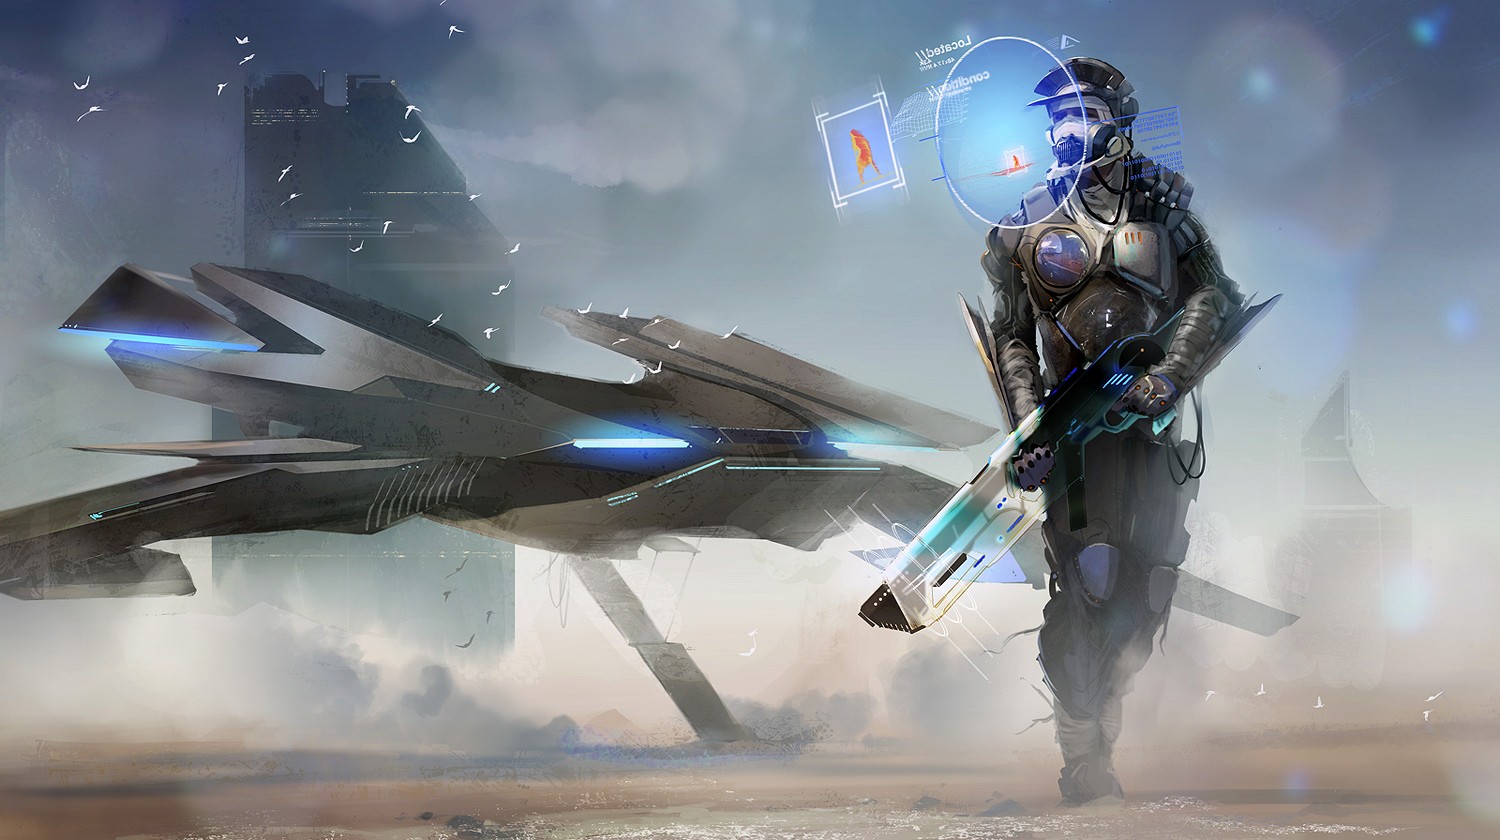 General 1500x840 spaceship futuristic science fiction weapon vehicle digital art artwork